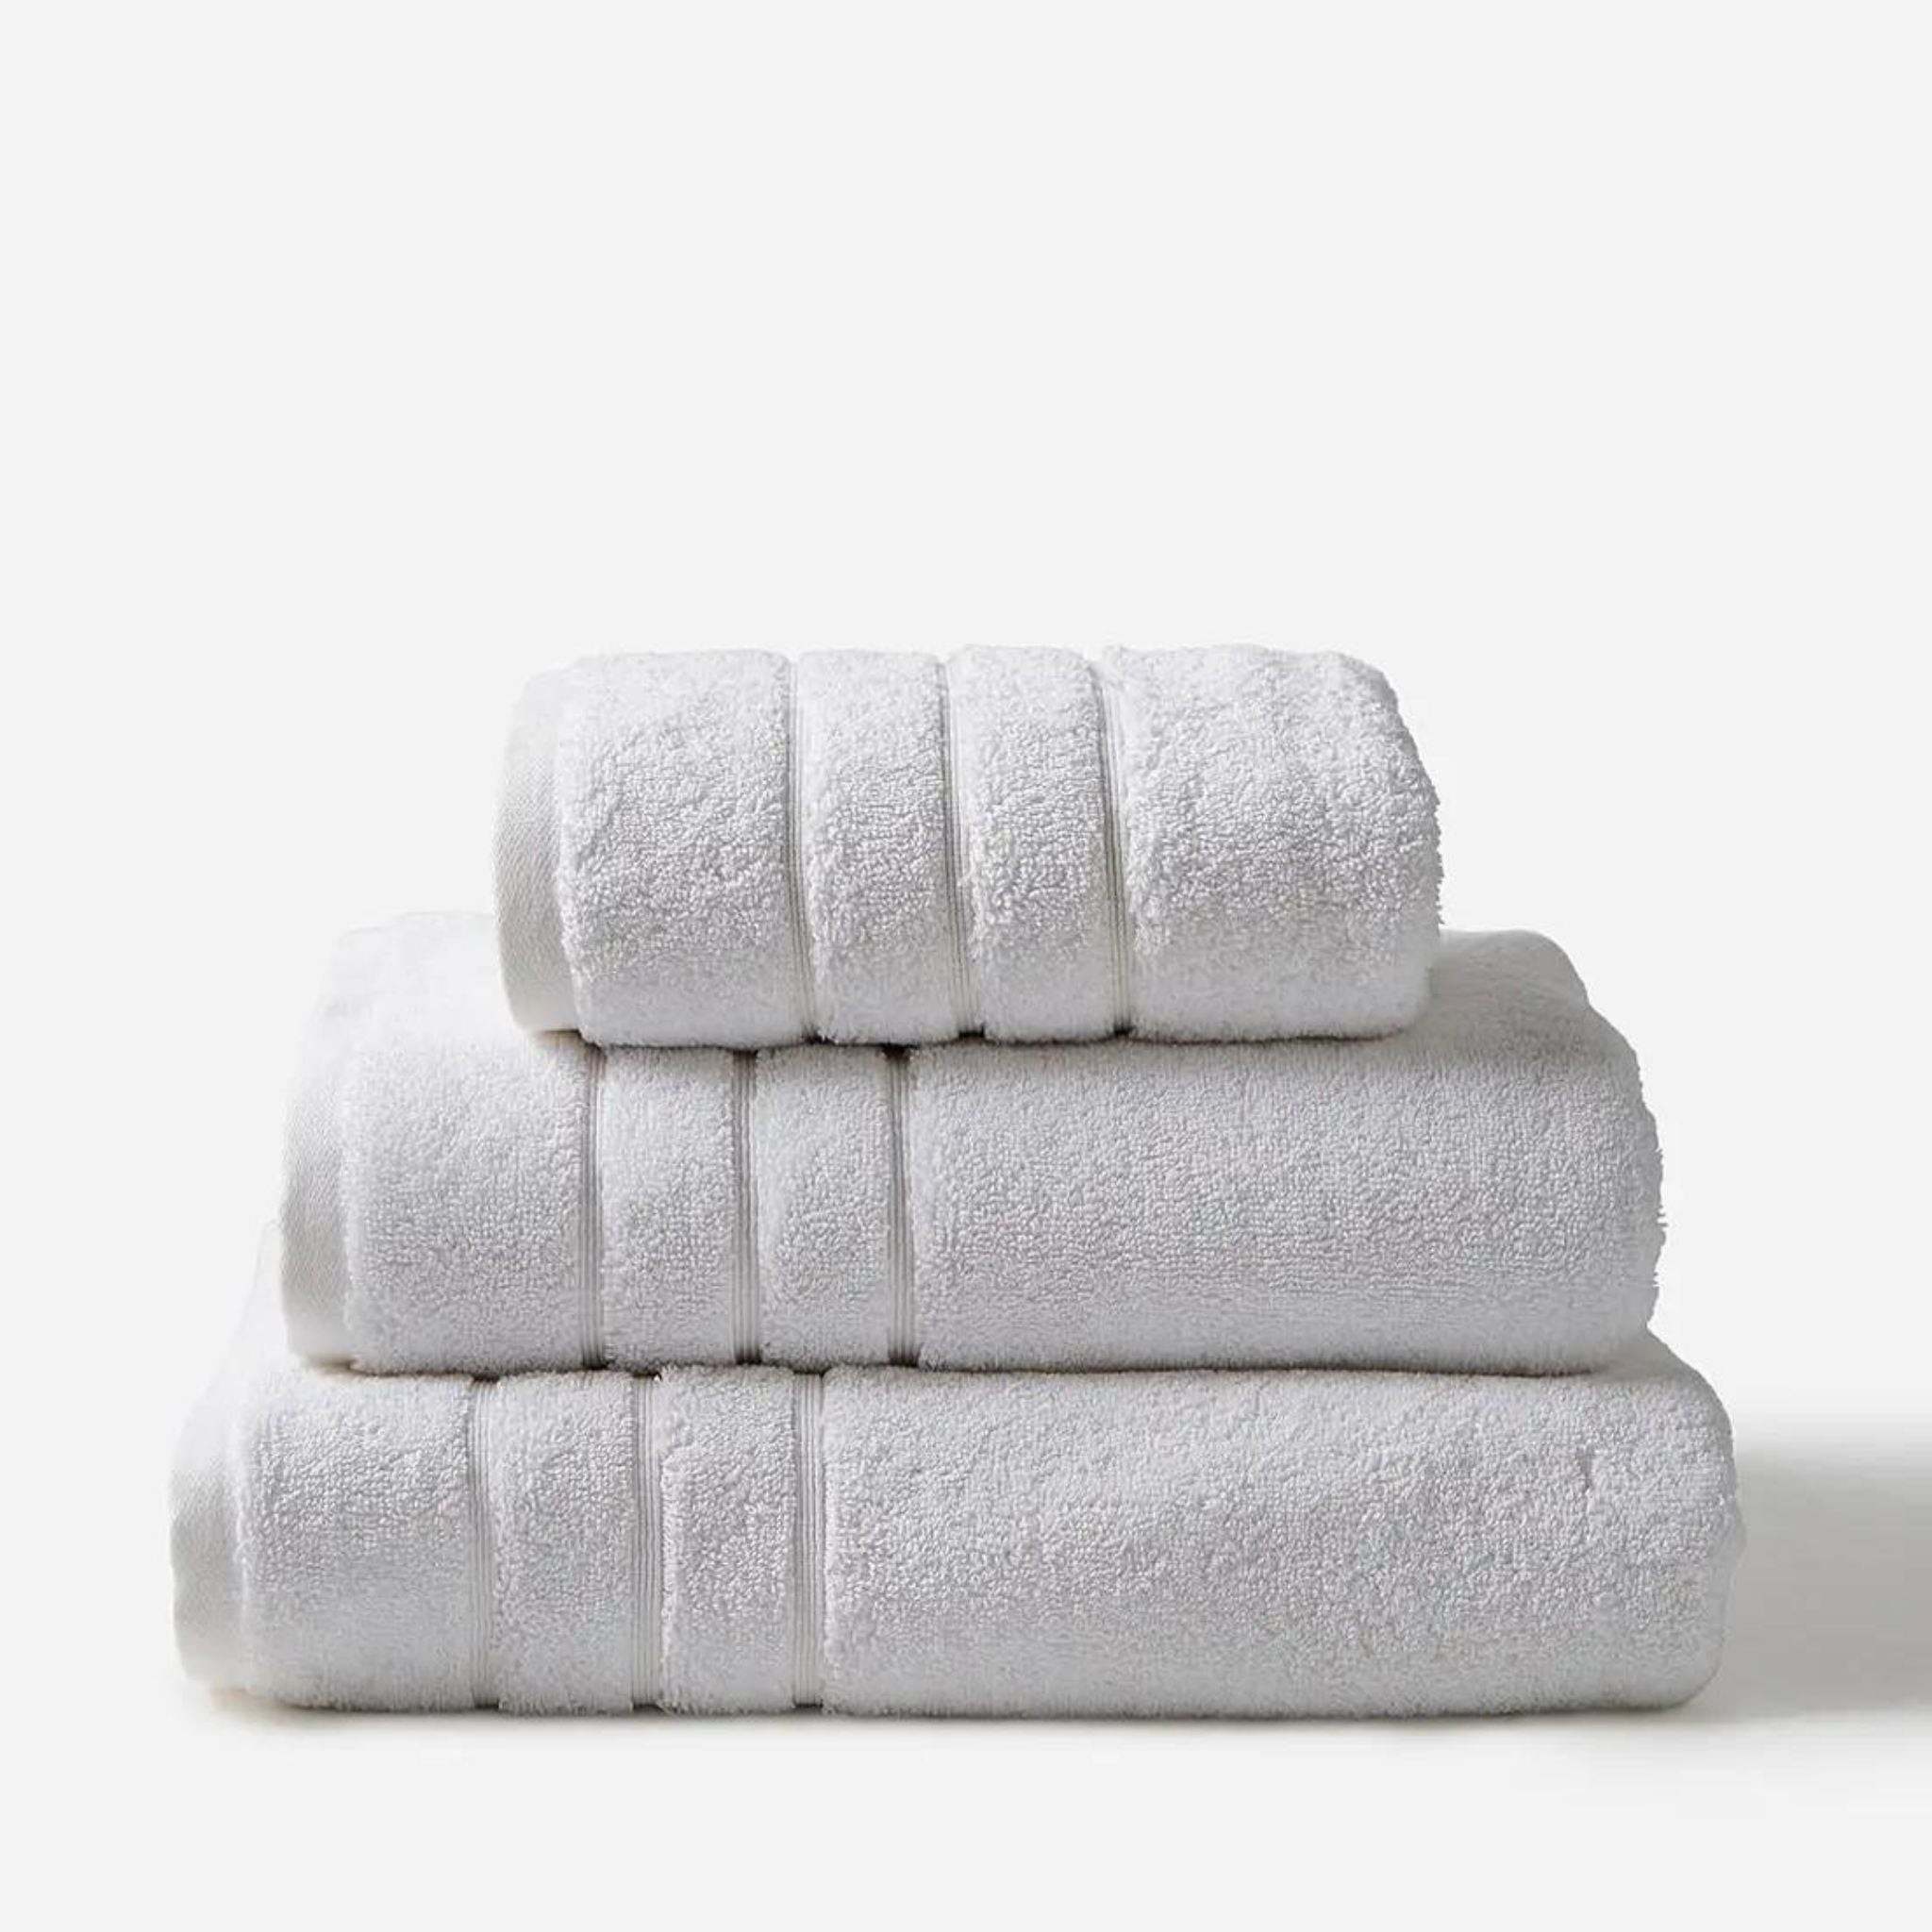 Luxury Linen Towel, Lithuanian Linen Bath Towel, Sauna Towel, Beach Sheet,  Bath Sheet, White Towel, Linen Beach Towel, Damask Linen Towel 